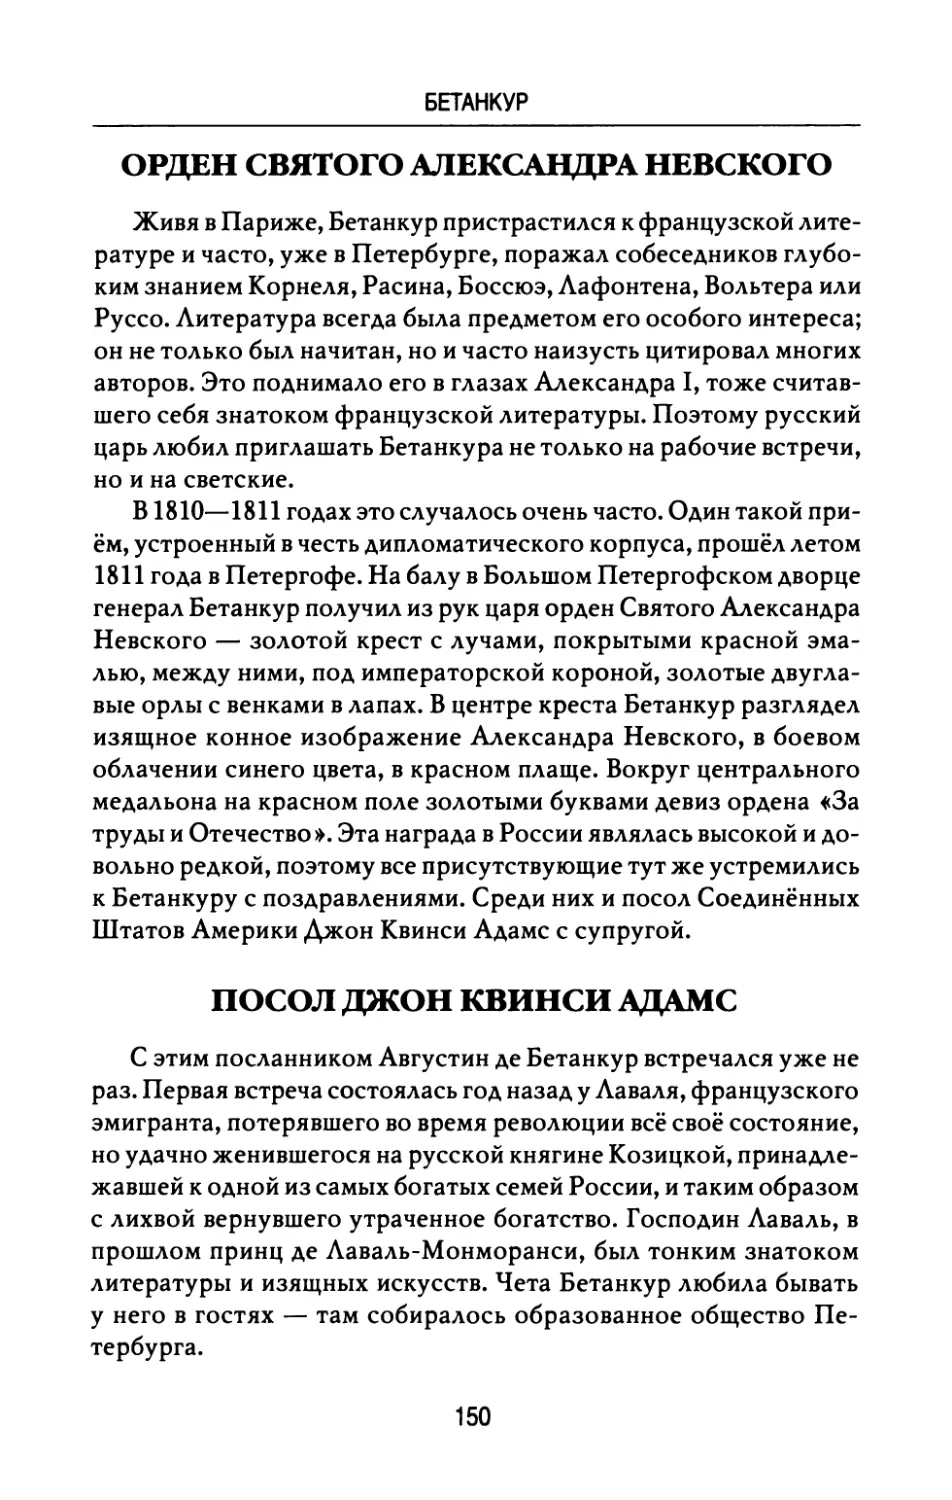 Орден  Святого  Александра  Невского
Посол  Джон  Квинси  Адамс